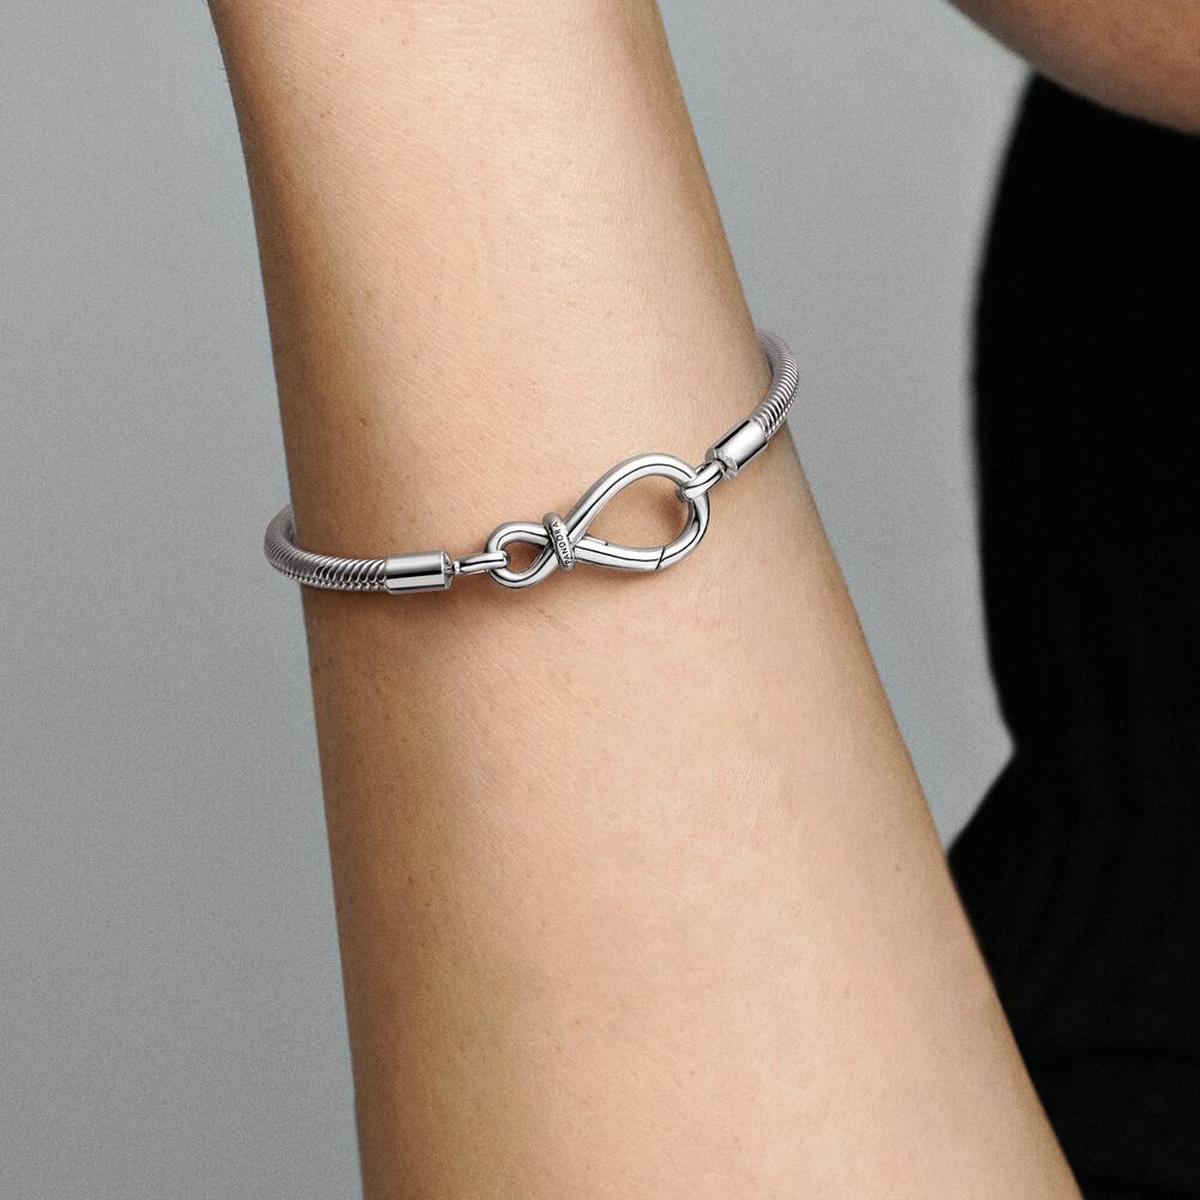 Georg Jensen Infinity Bracelet in Silver - Lister Horsfall